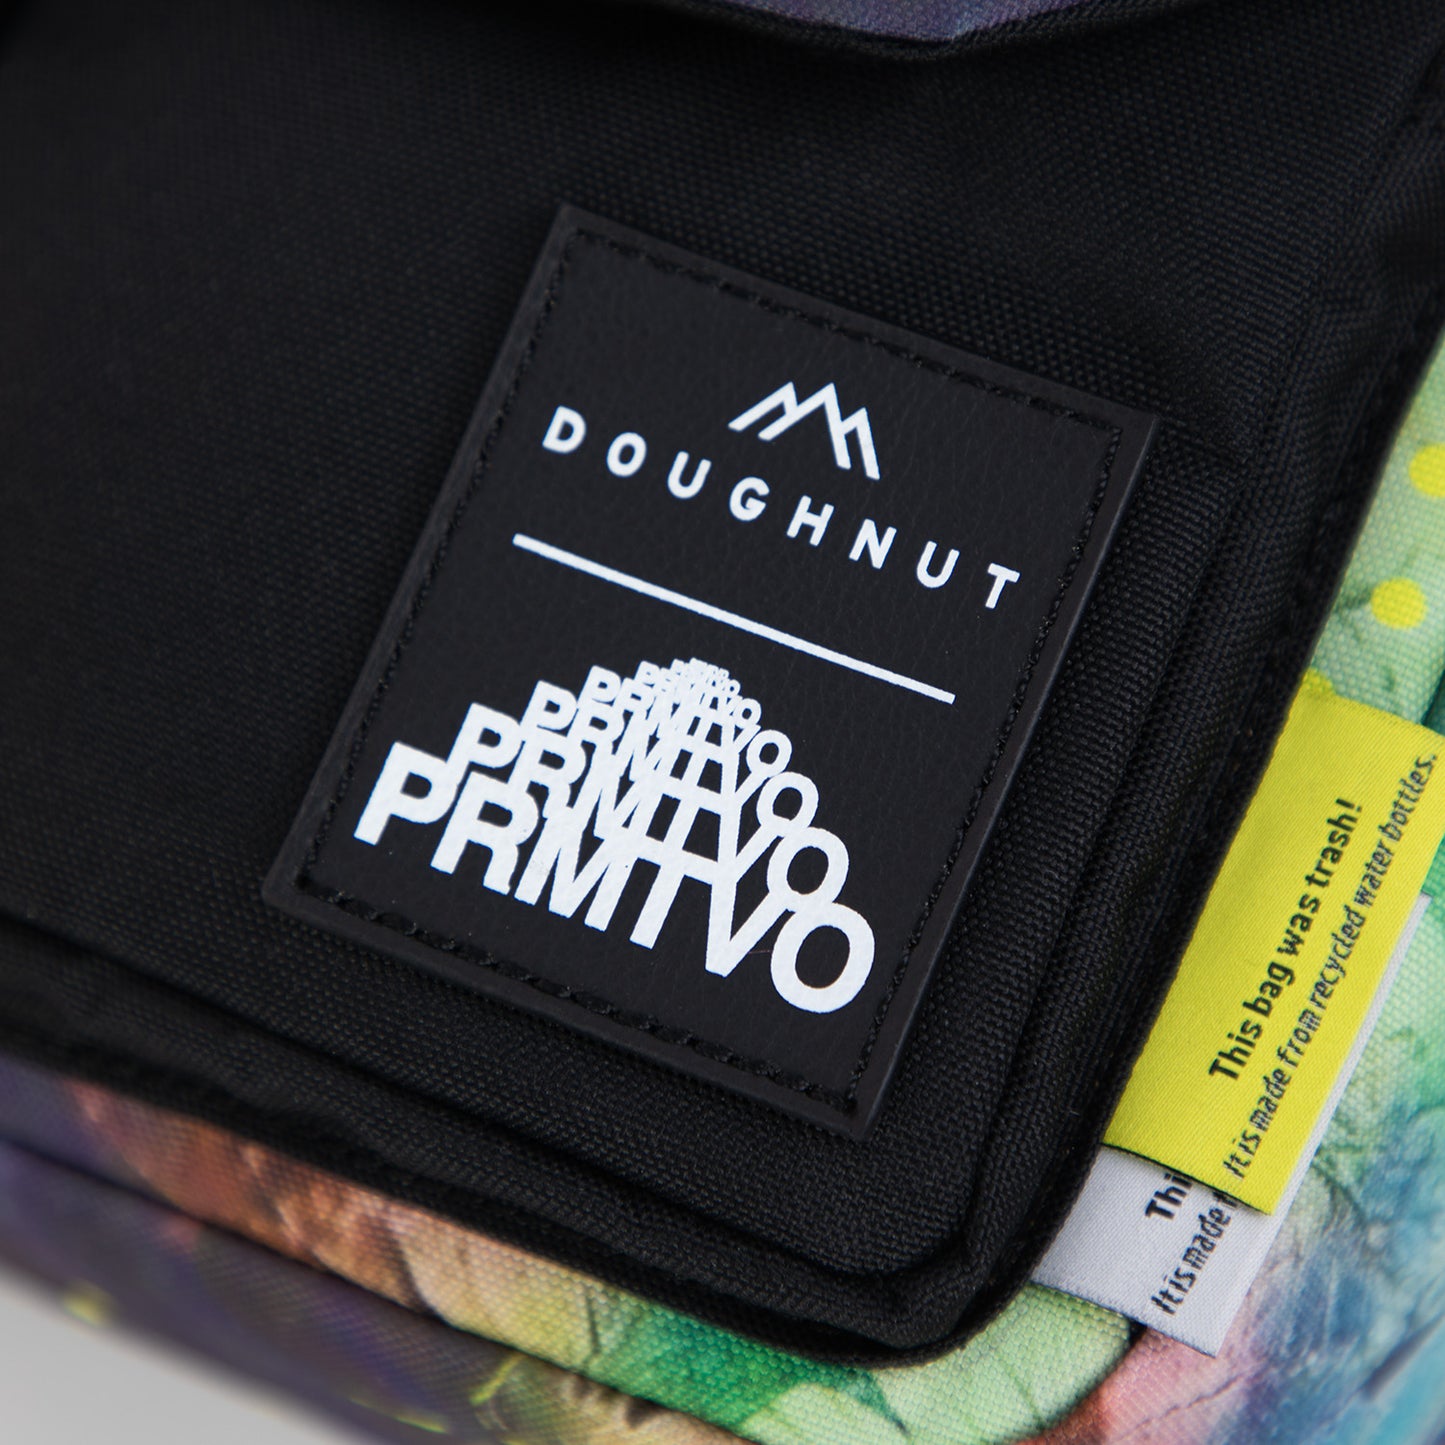 Mission Doughnut X PRMTVO Series Crossbody Bag